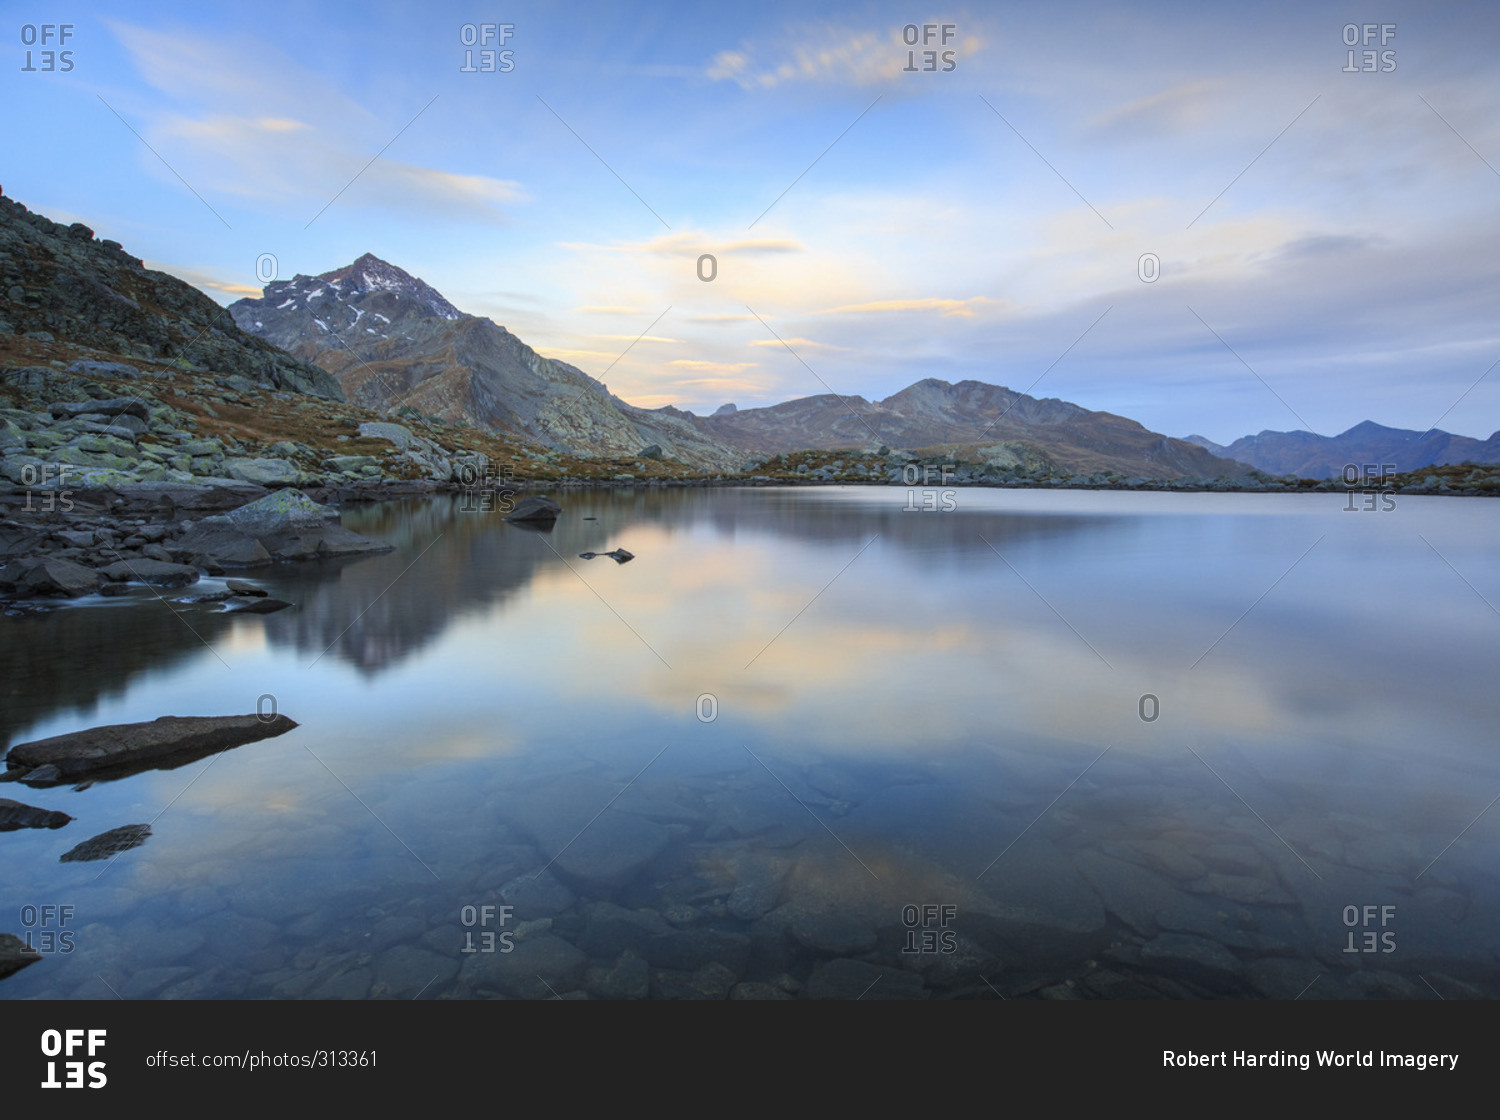 Peak Tambo reflected in Lake Bergsee at dawn, Chiavenna Valley, Spluga Valley, Switzerland